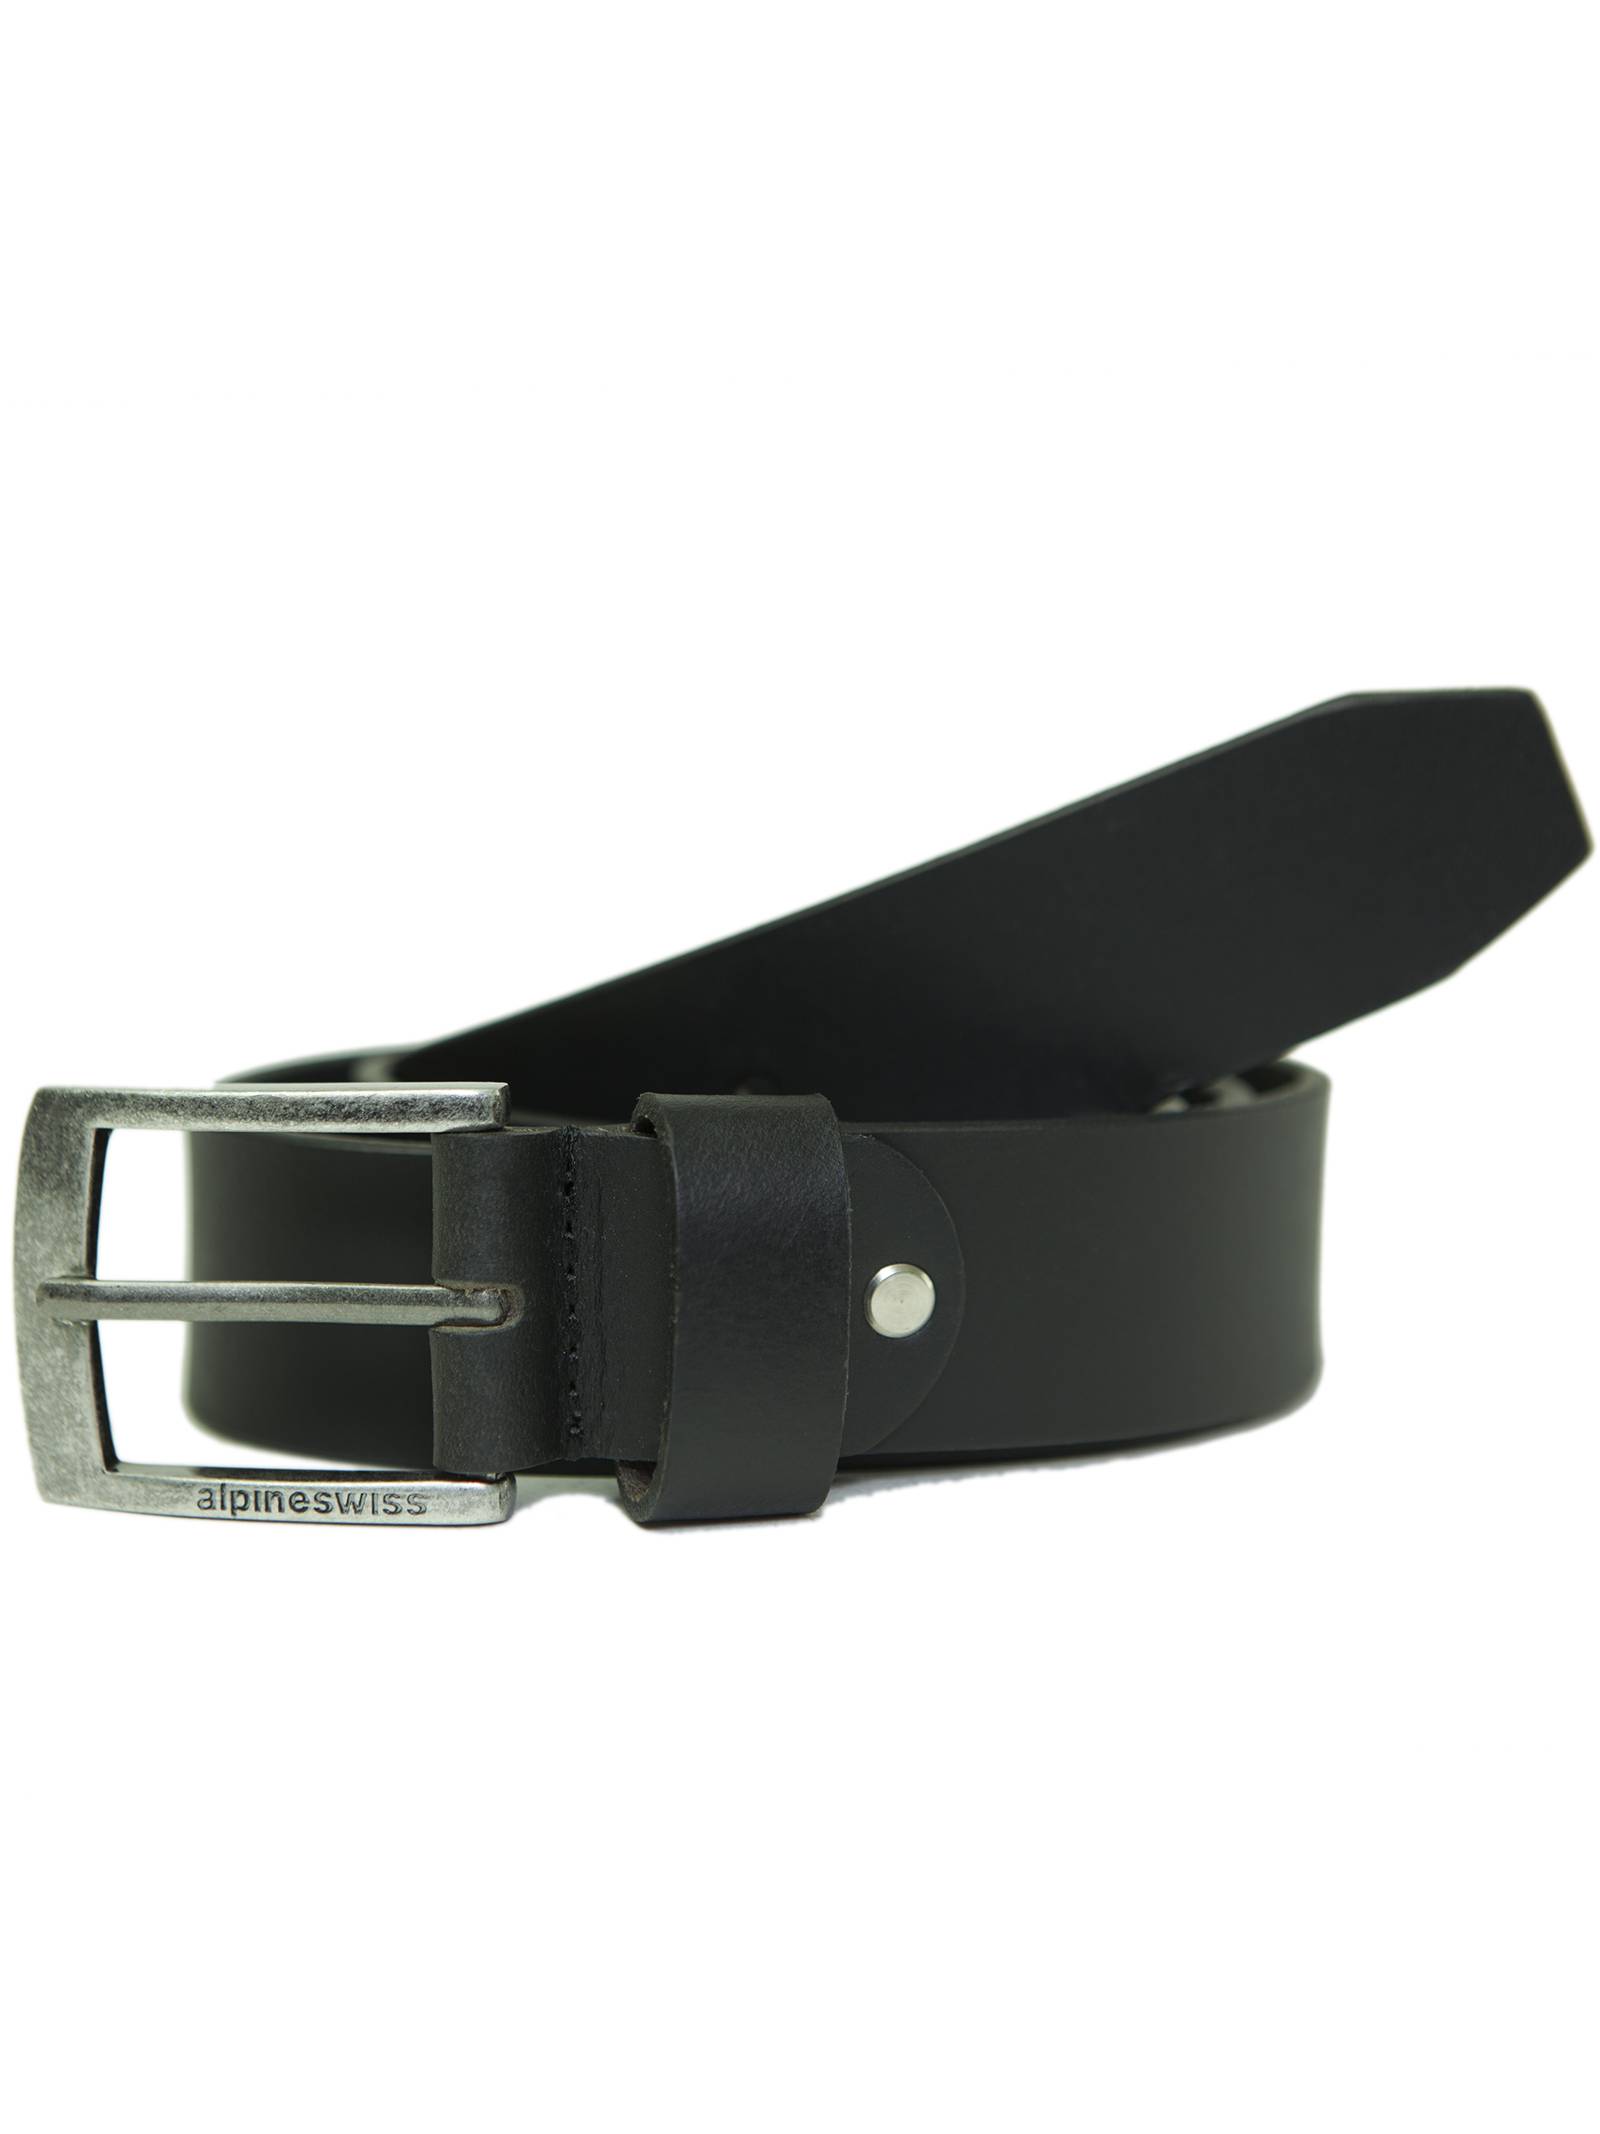 Alpine Swiss Mens Belt Genuine Leather Slim 1.25” Casual Jean Belt Dakota Buckle - image 3 of 6